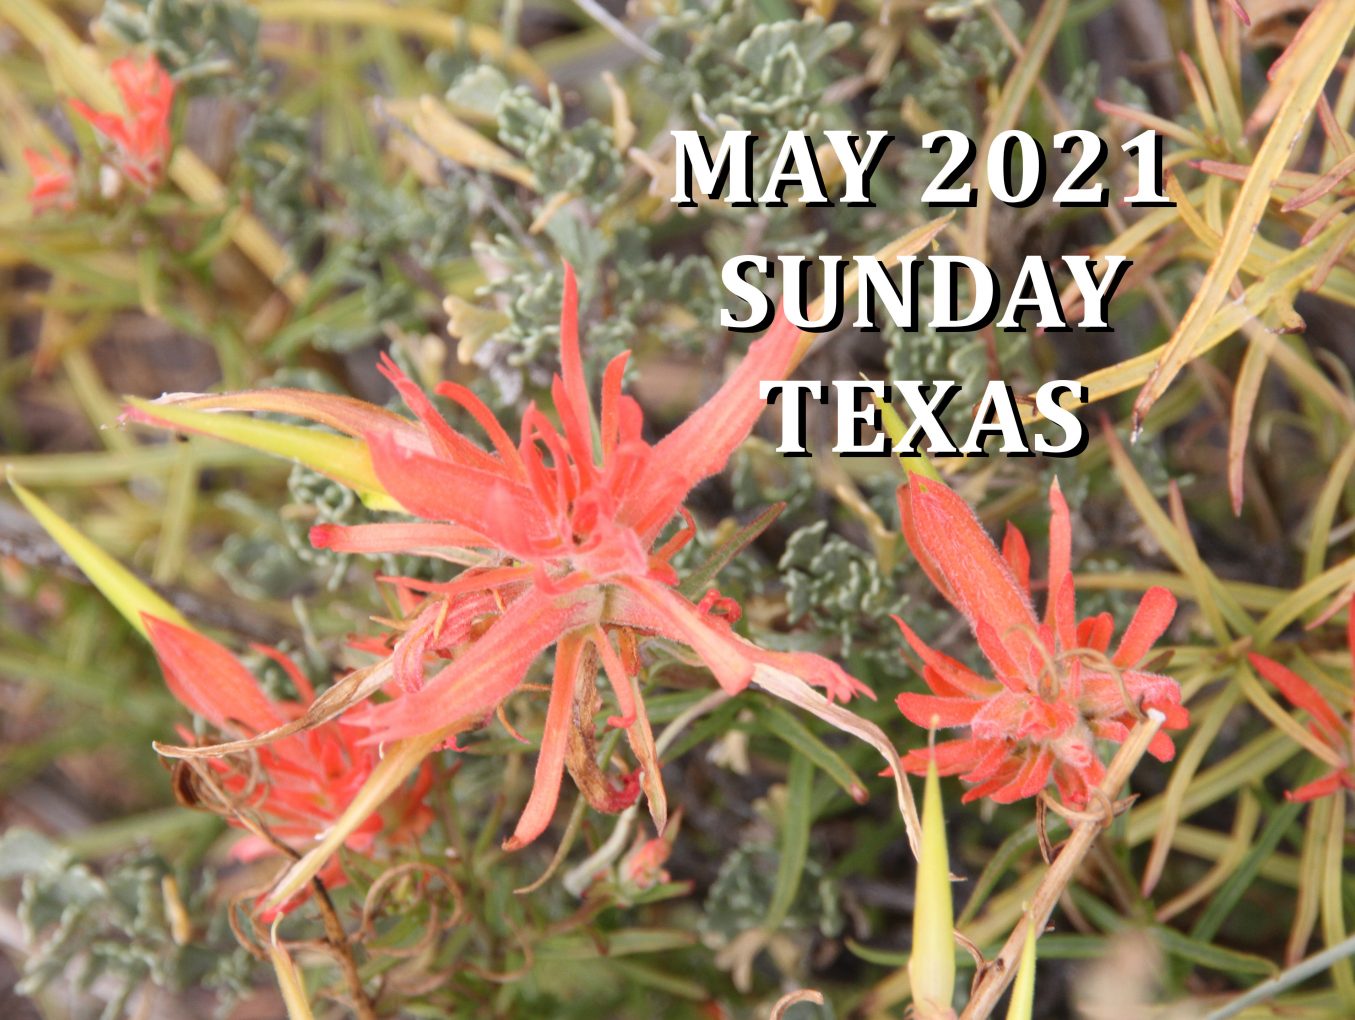 May 2021 Texas Sunday Services